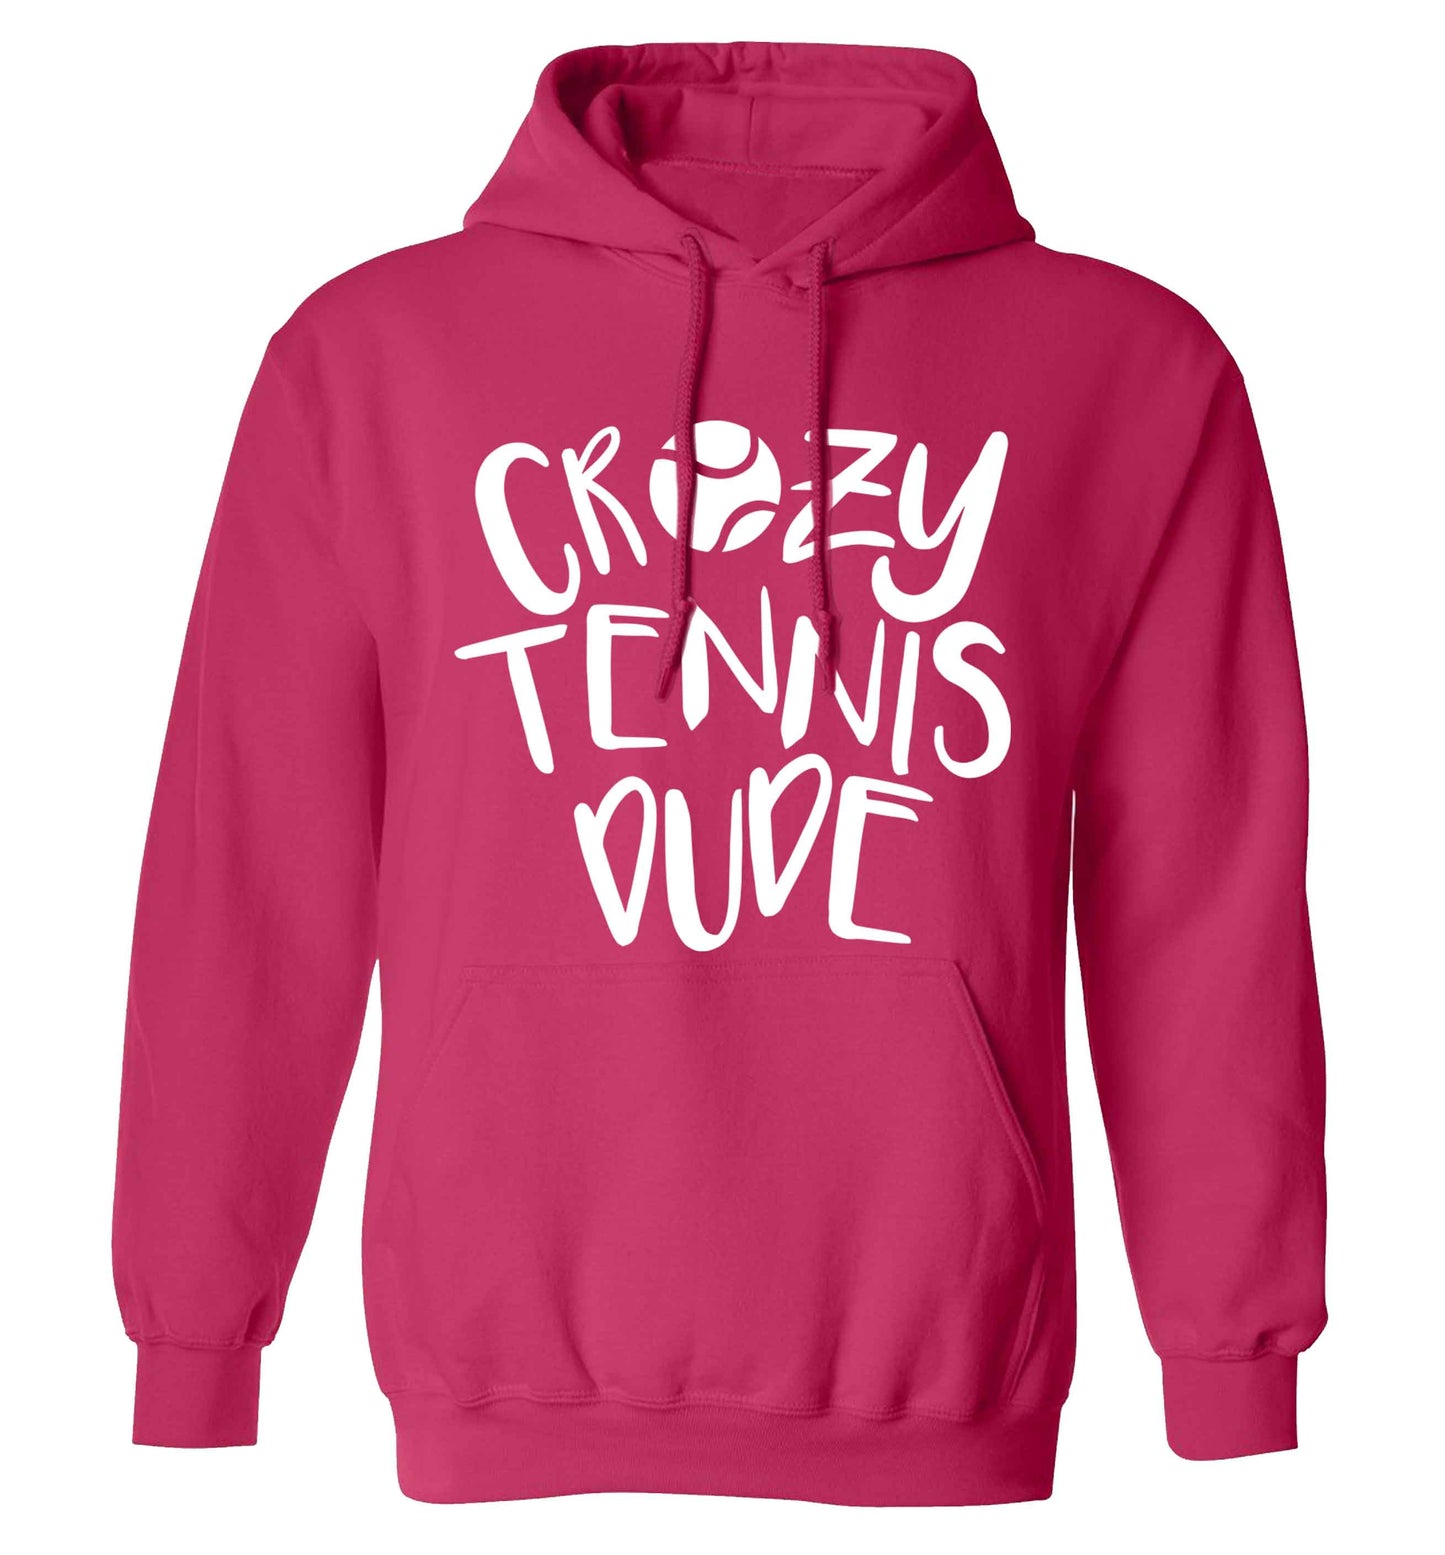 Crazy tennis dude adults unisex pink hoodie 2XL